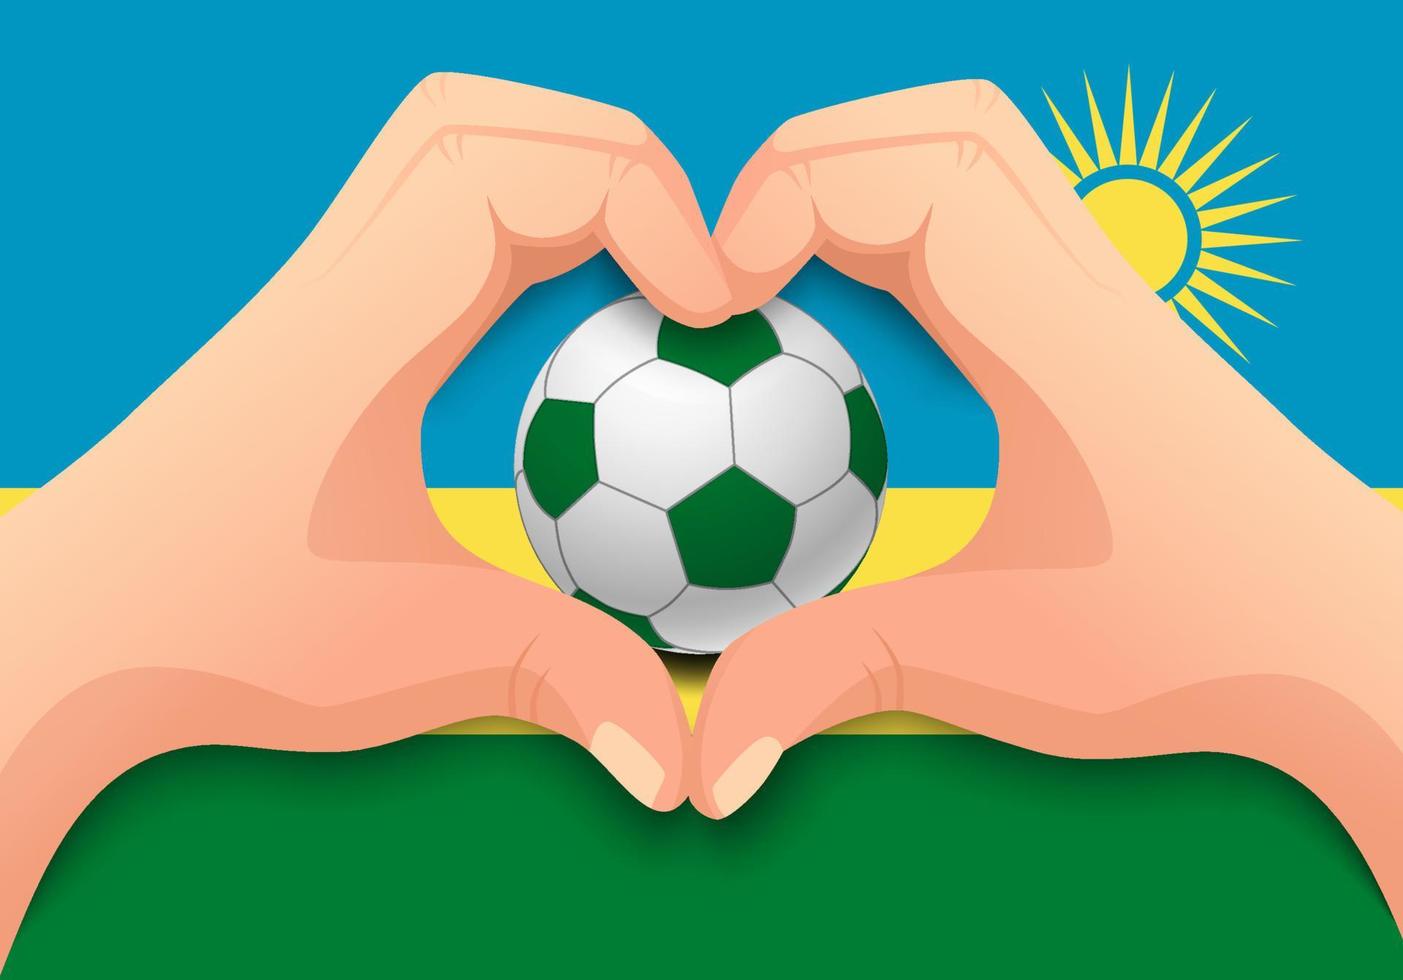 Rwanda soccer ball and hand heart shape vector